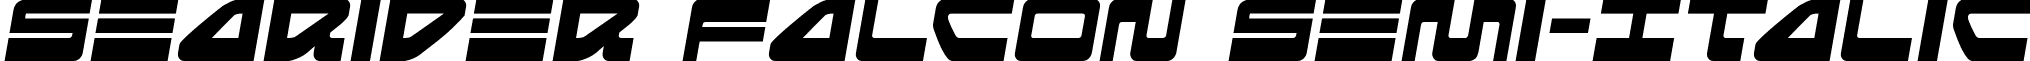 Searider Falcon Semi-Italic font - seariderfalconsemital.ttf